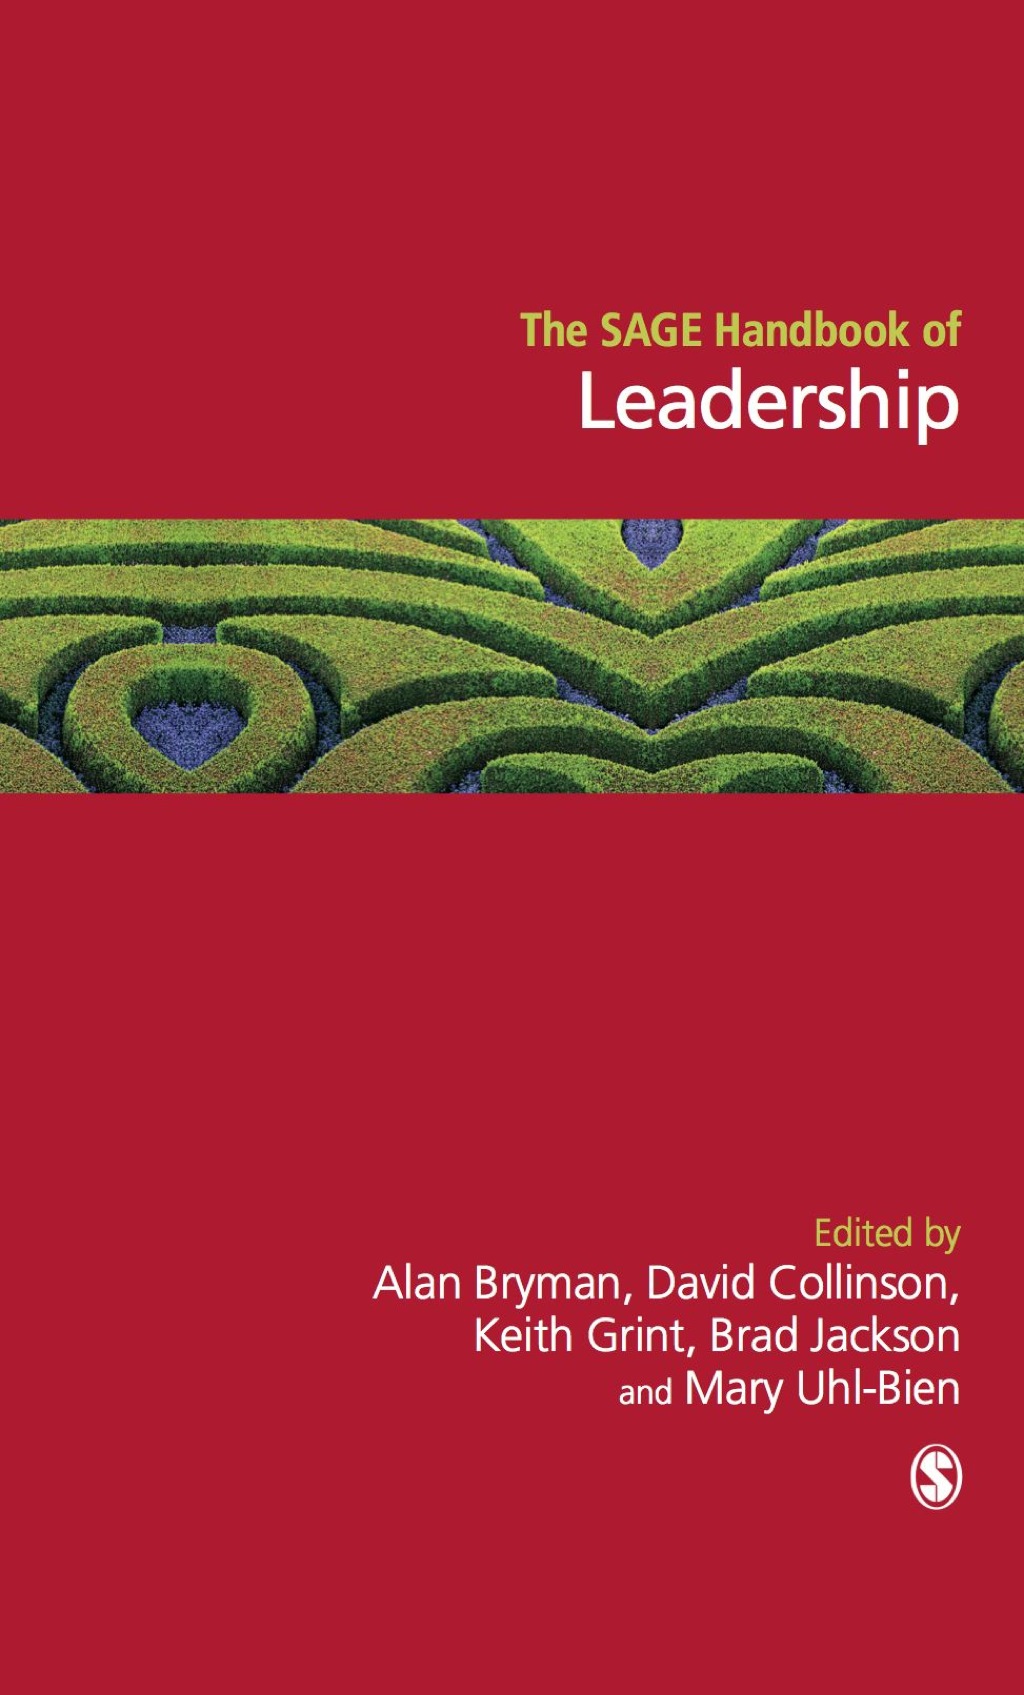 The SAGE Handbook of Leadership (eBook) - Alan Bryman; David Collinson; Keith Grint; Brad Jackson; Mary Uhl-Bien